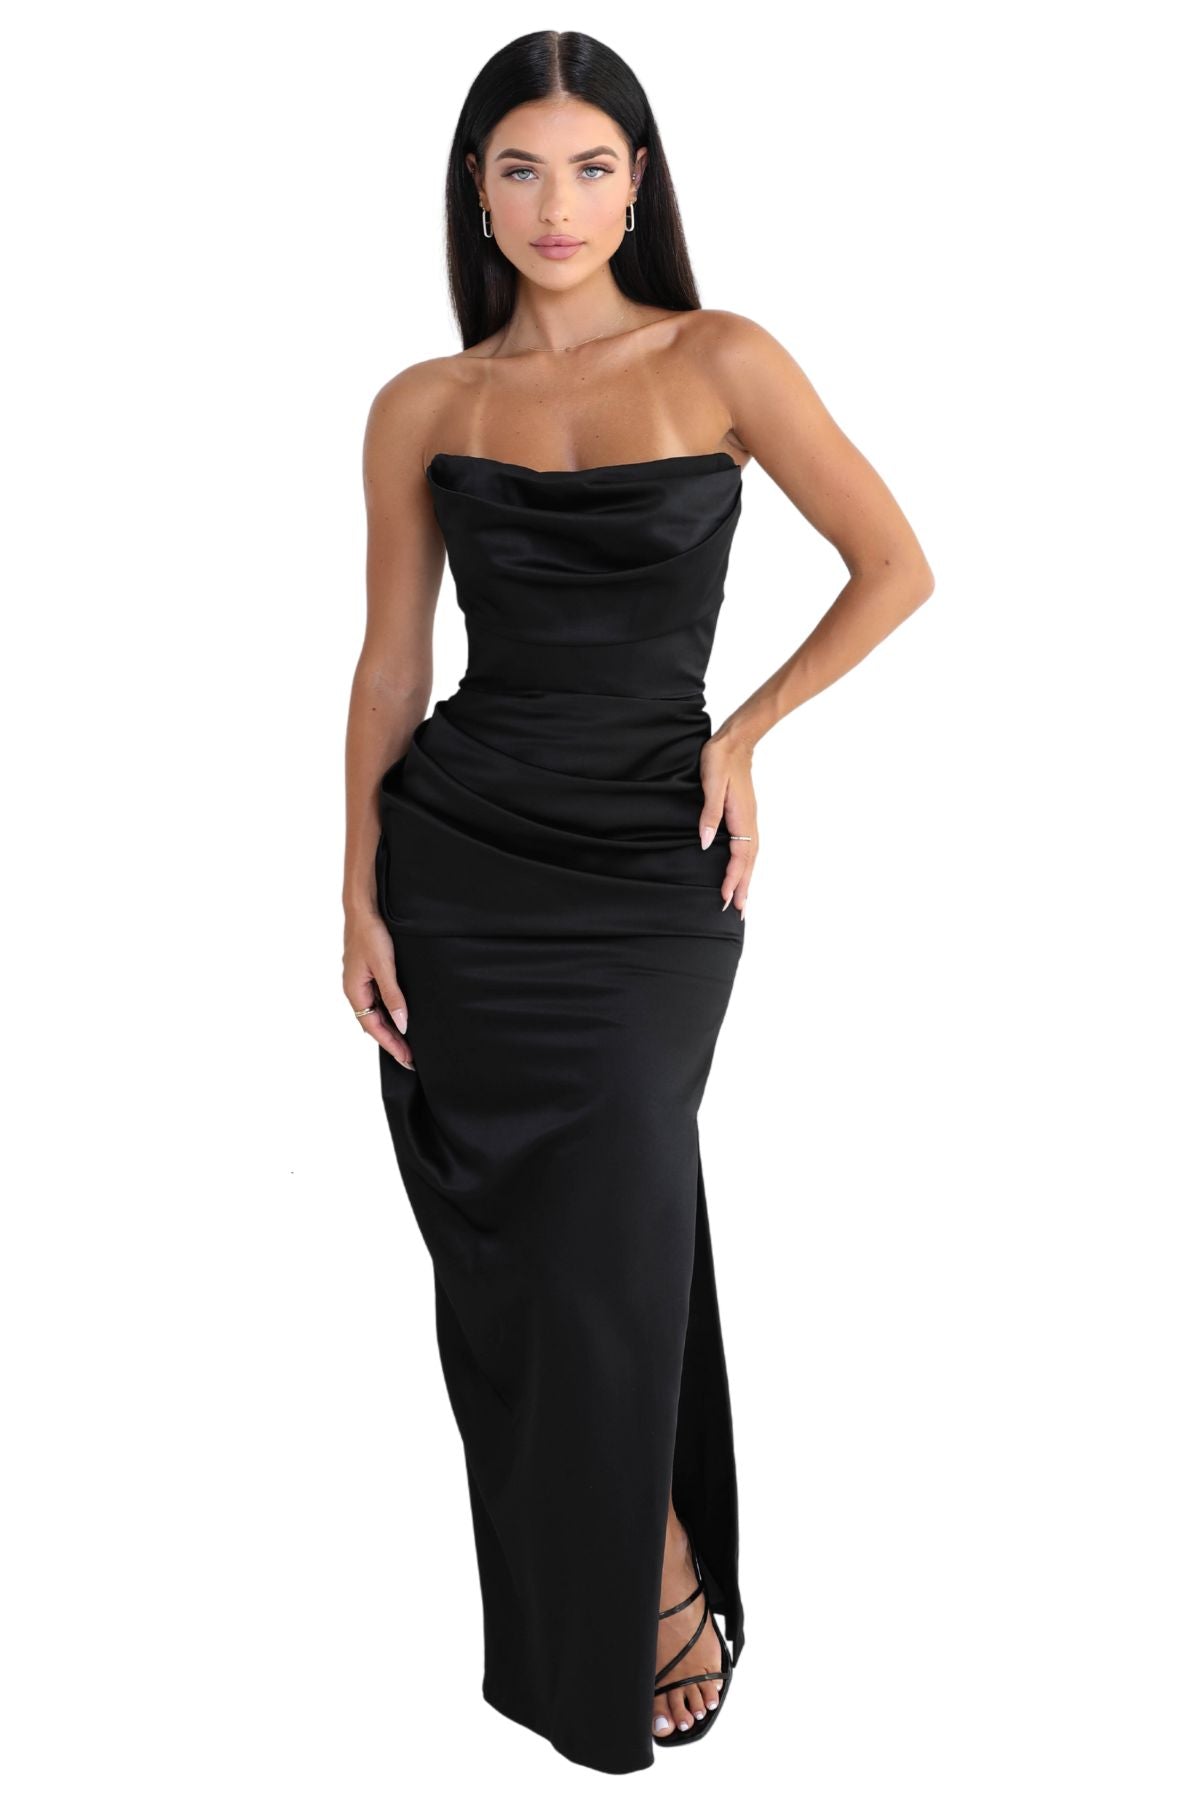 Rent HOUSE OF CB Sabine Strapless Corset Dress (Black) - Rent this dress!